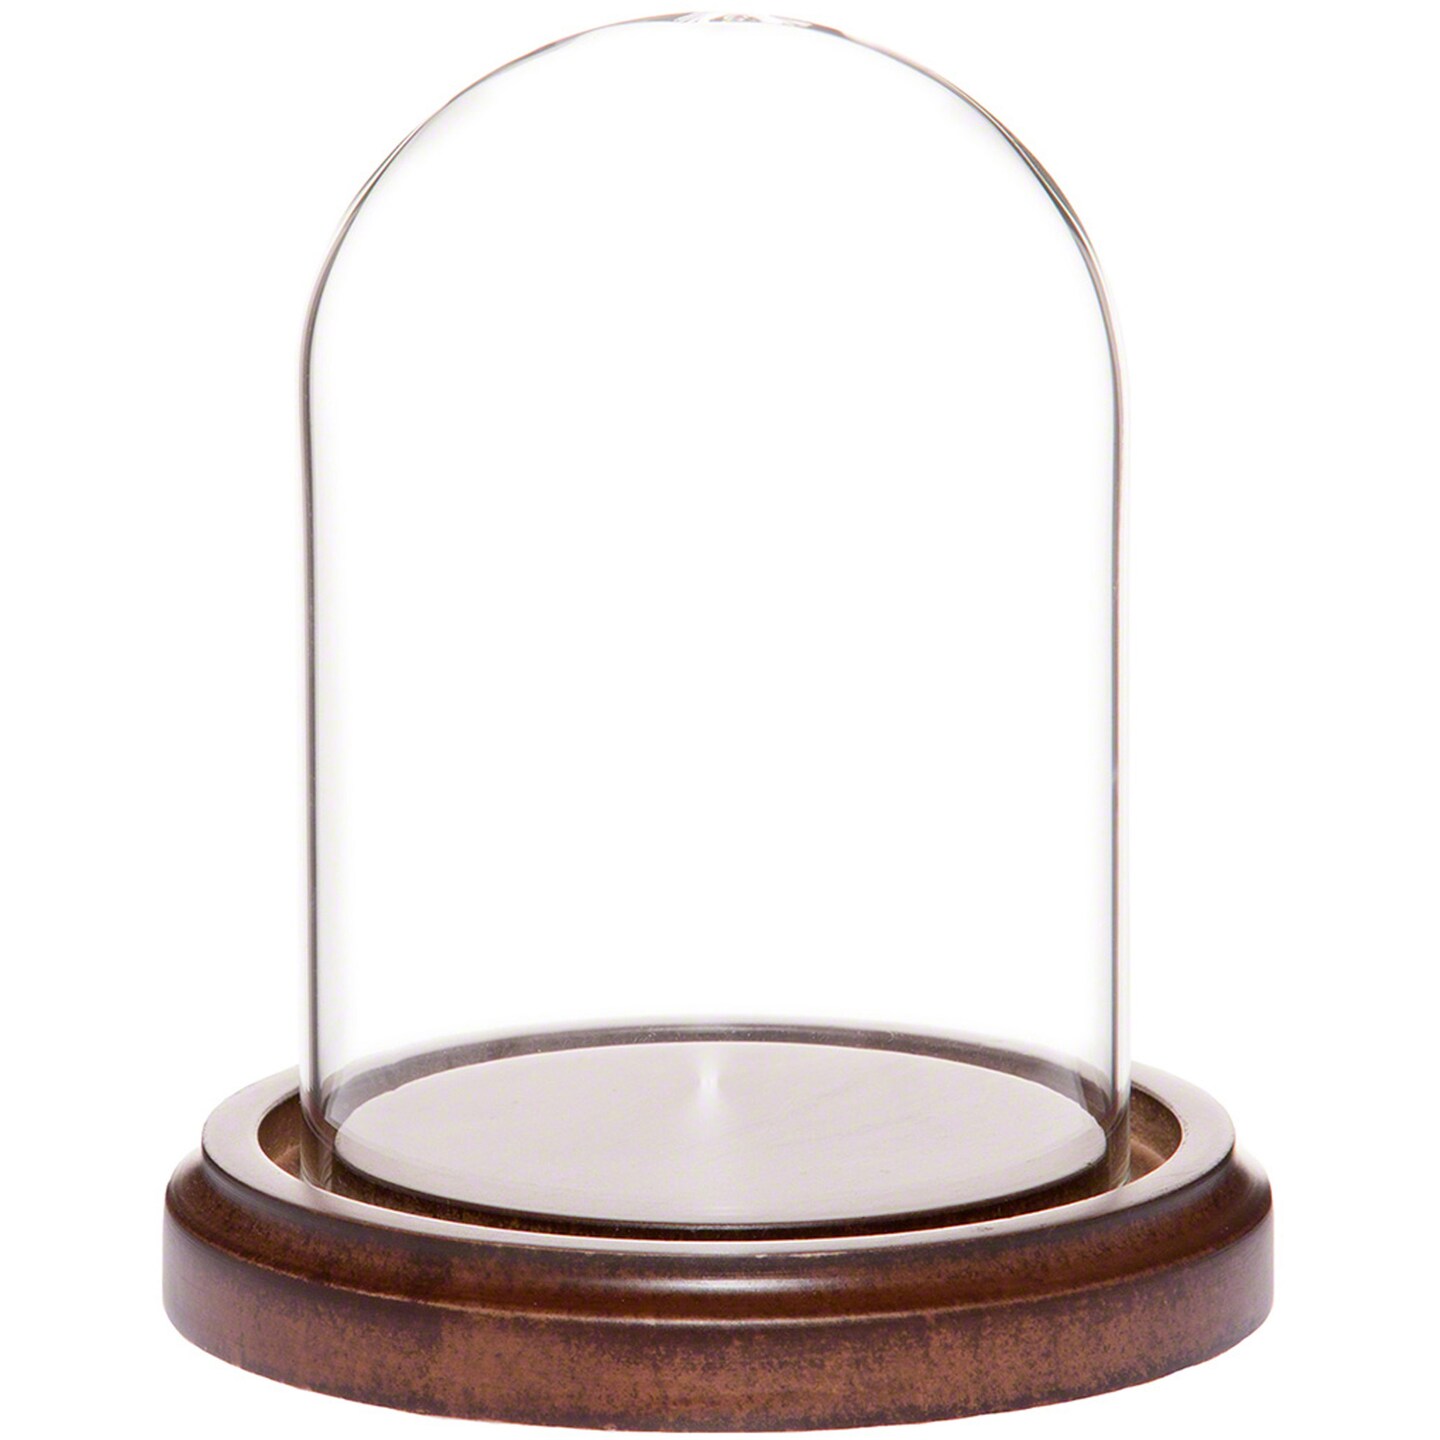 Plymor 3" x 4" Glass Display Dome Cloche